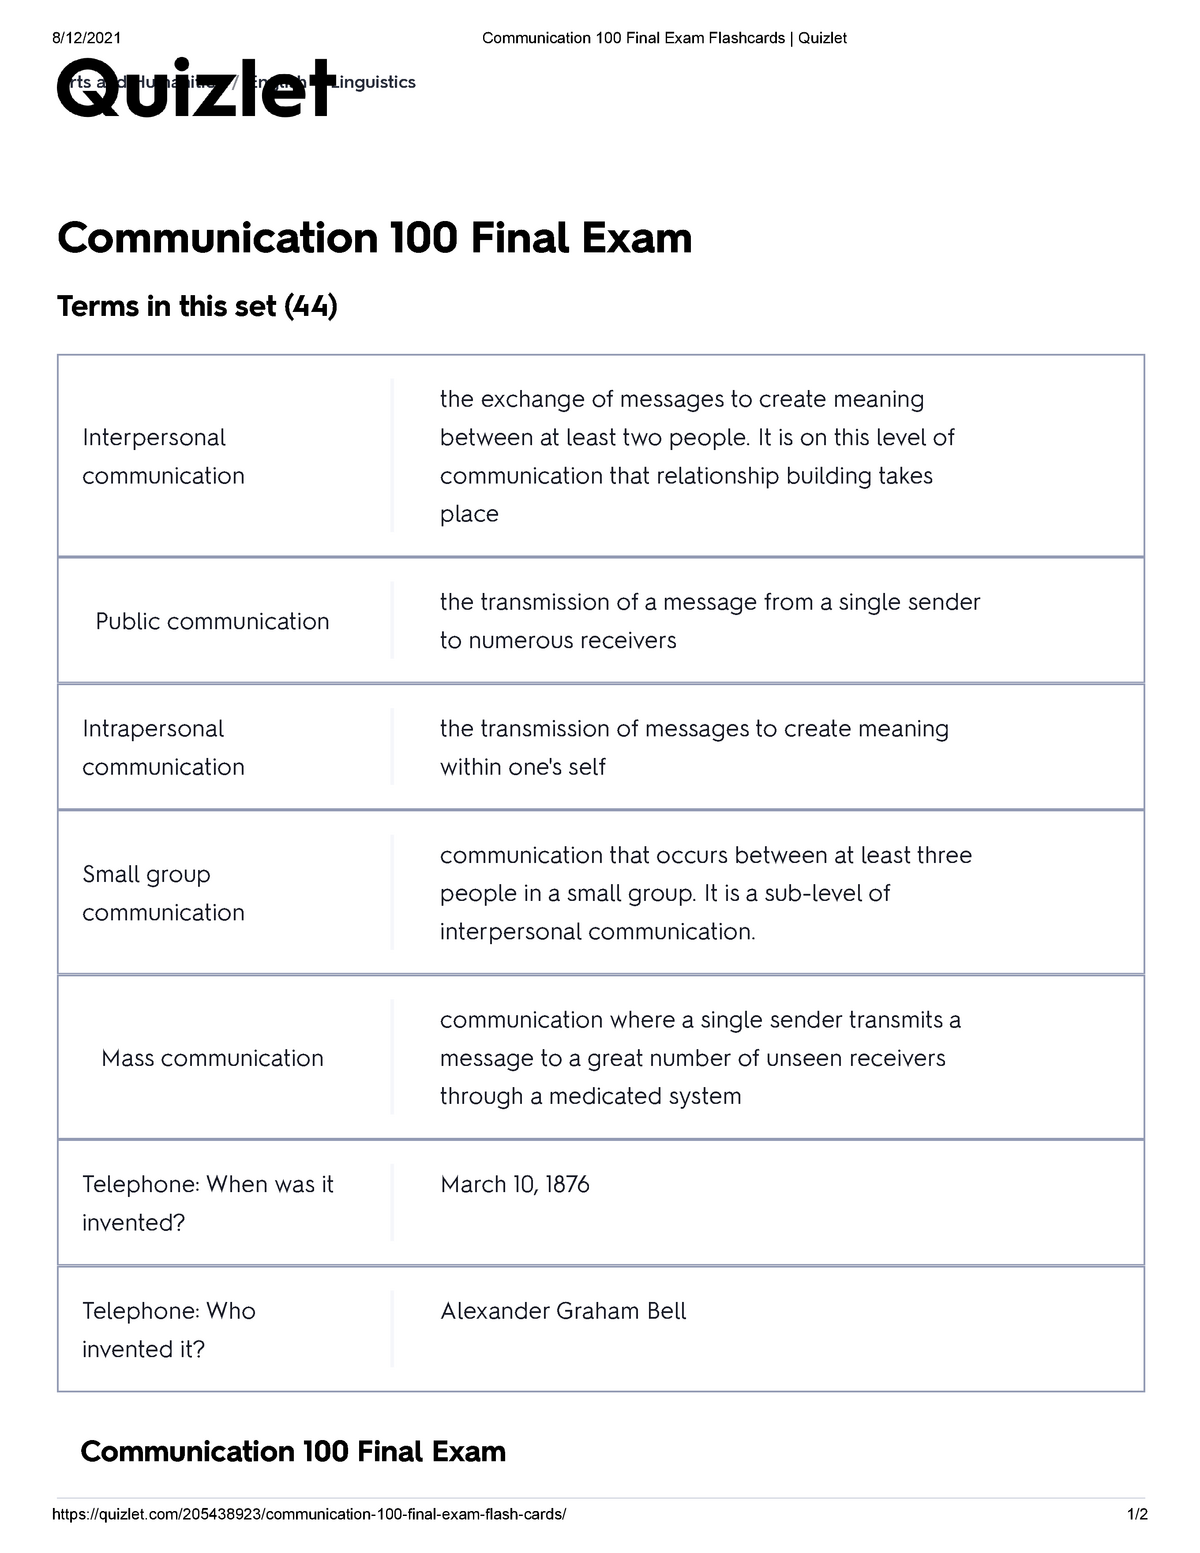 communication skills assignment quizlet